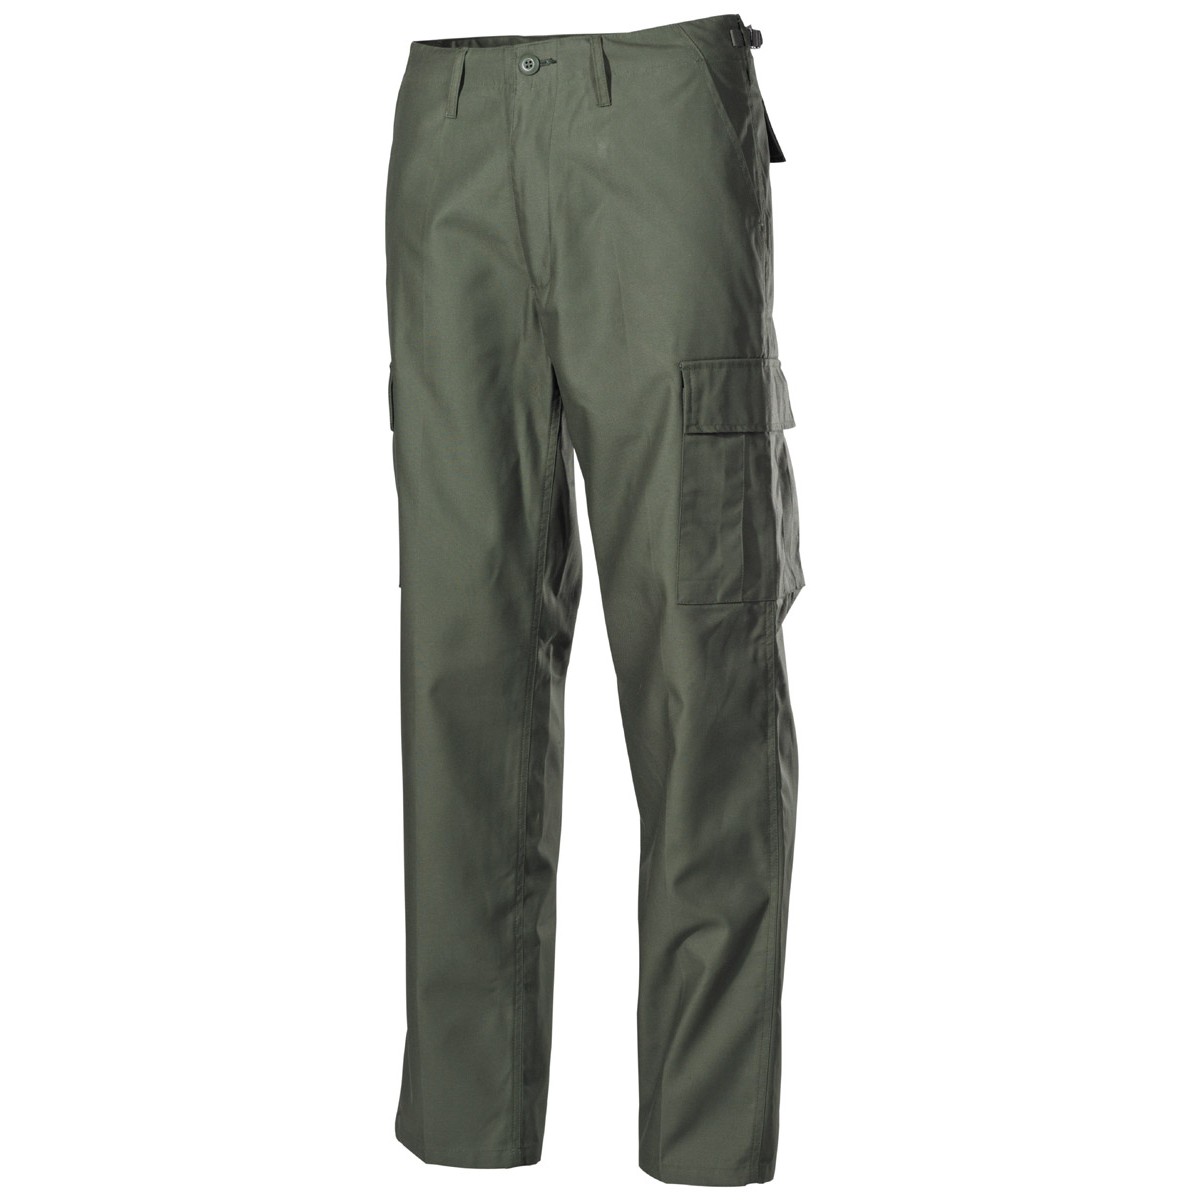 Pantaloni US Combat Pants, BDU, OD green No.01304B